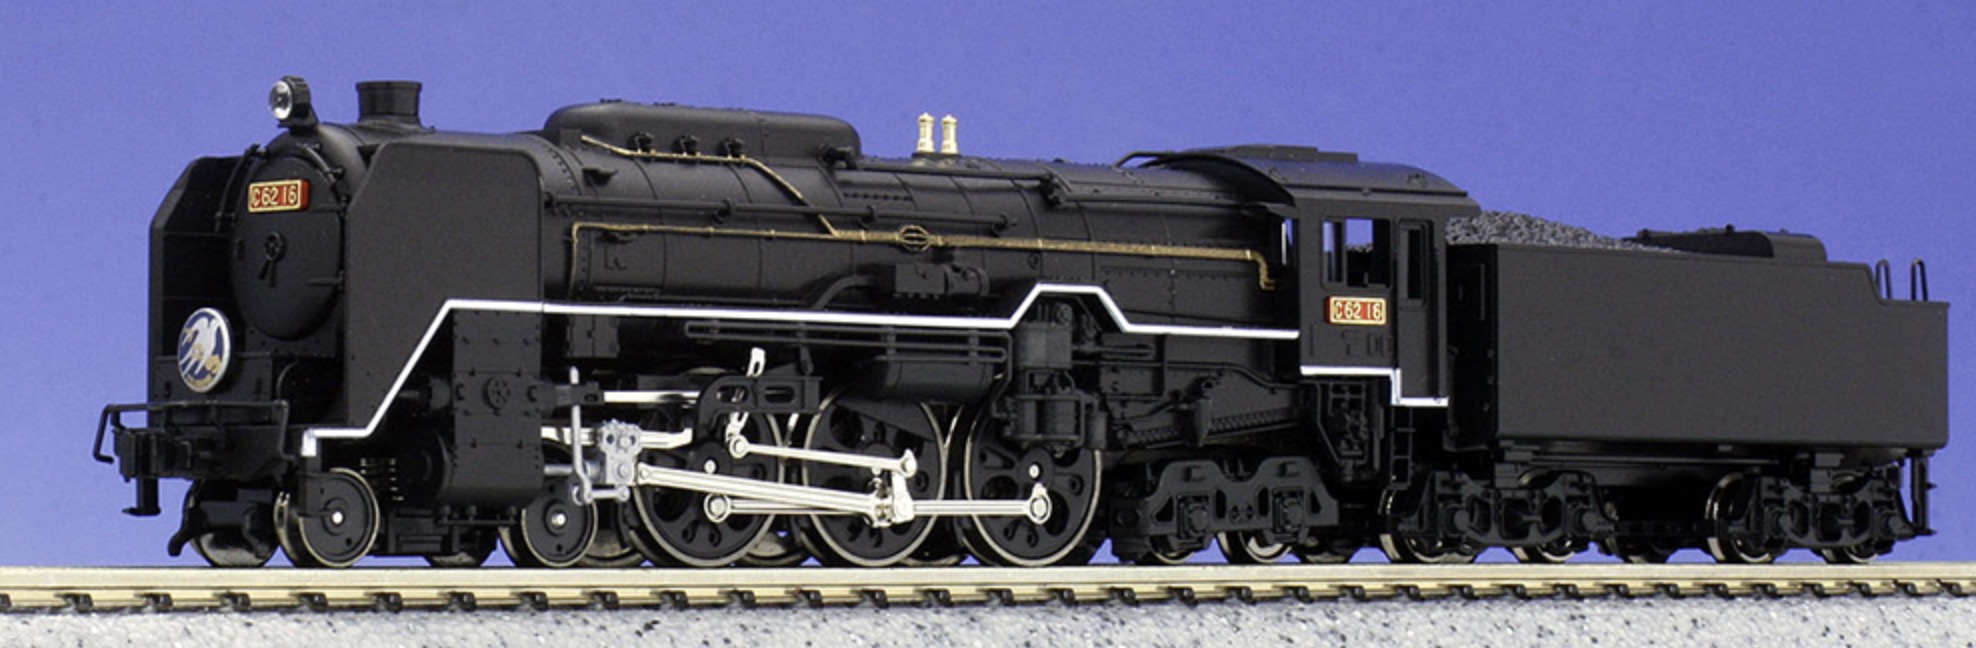 N Scale - Kato - 2019-2 - Locomotive, Steam, 4-6-4, C62 - Japanese National Railways - C62 16